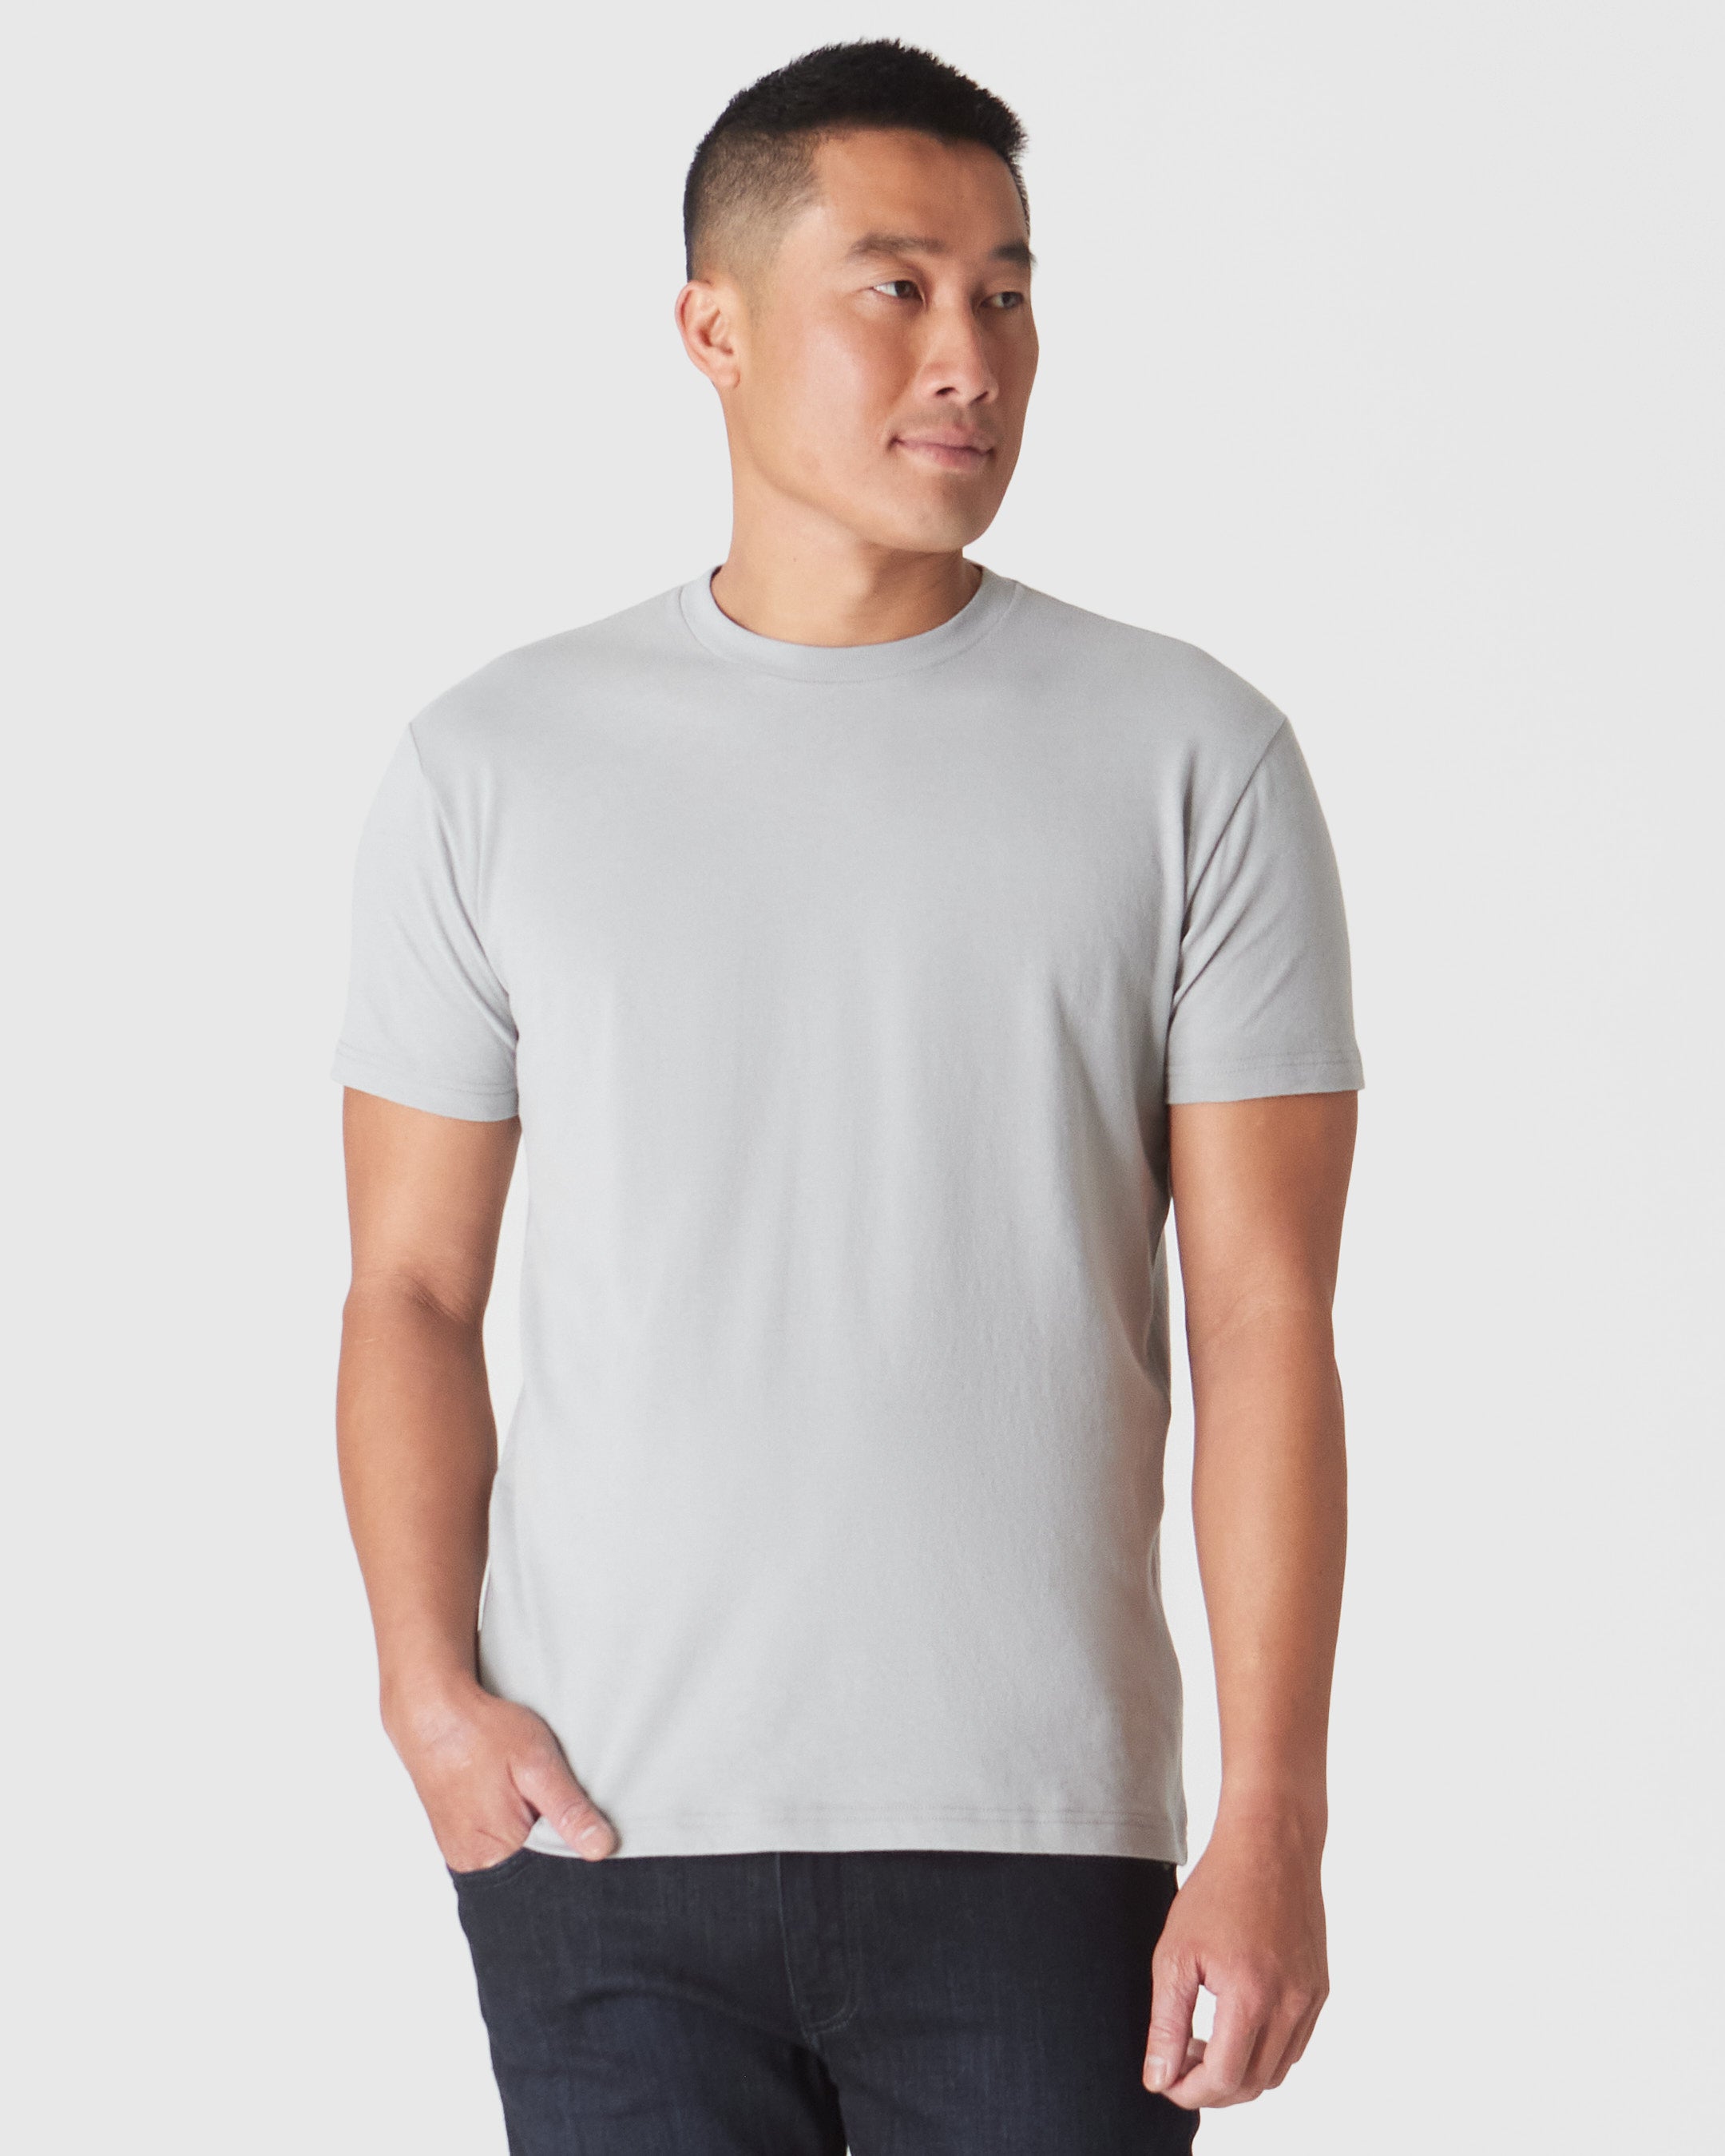 Steel Short Sleeve Crew Neck T-Shirt